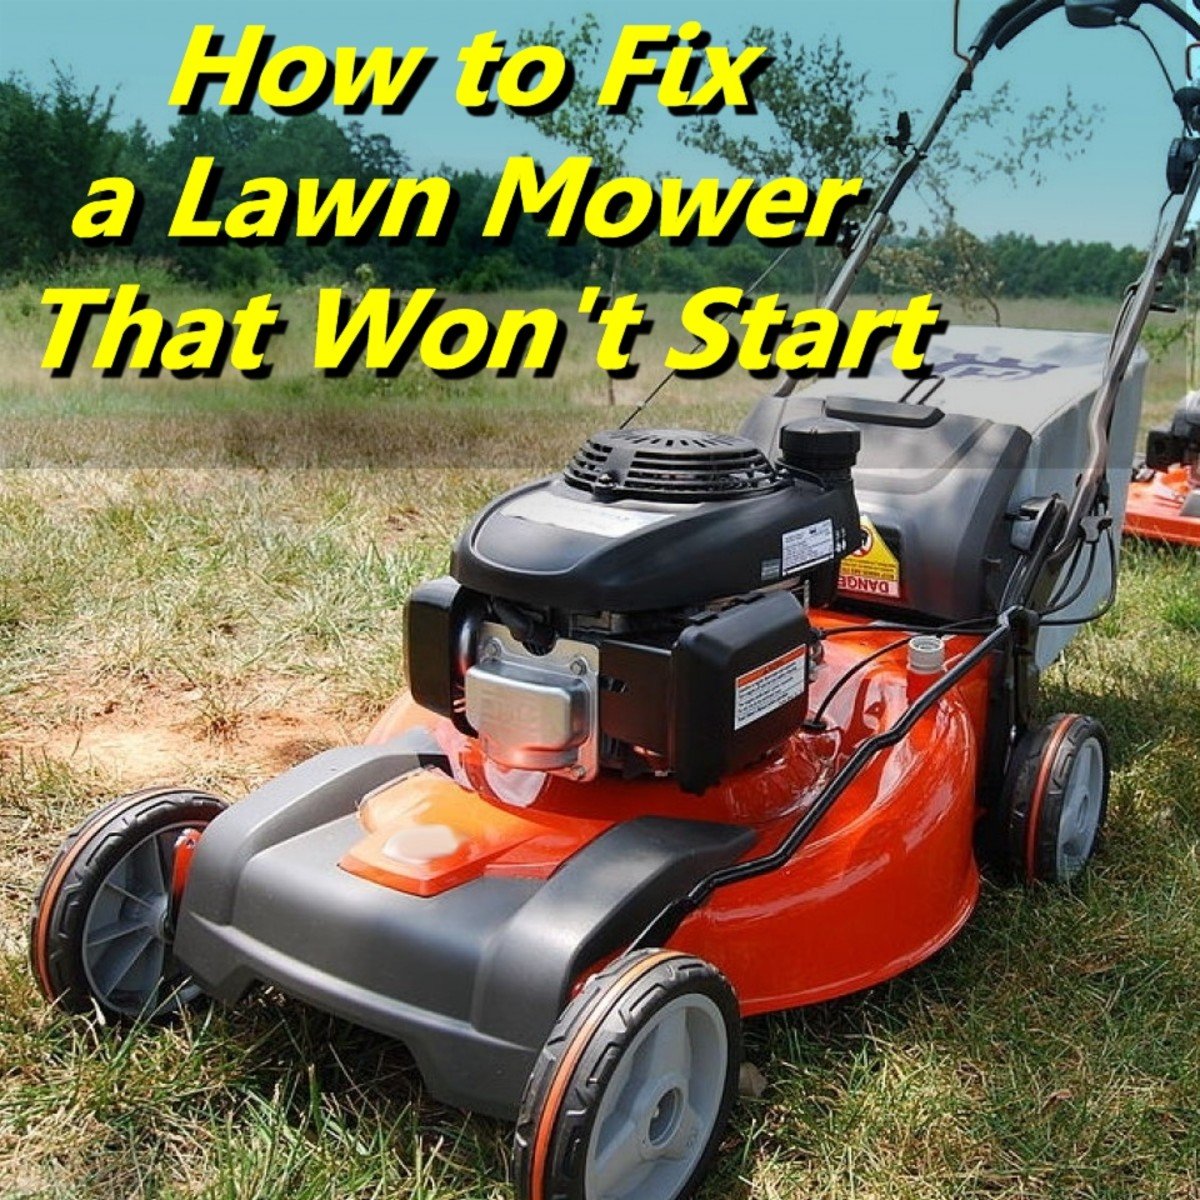 My Lawn Mower Won